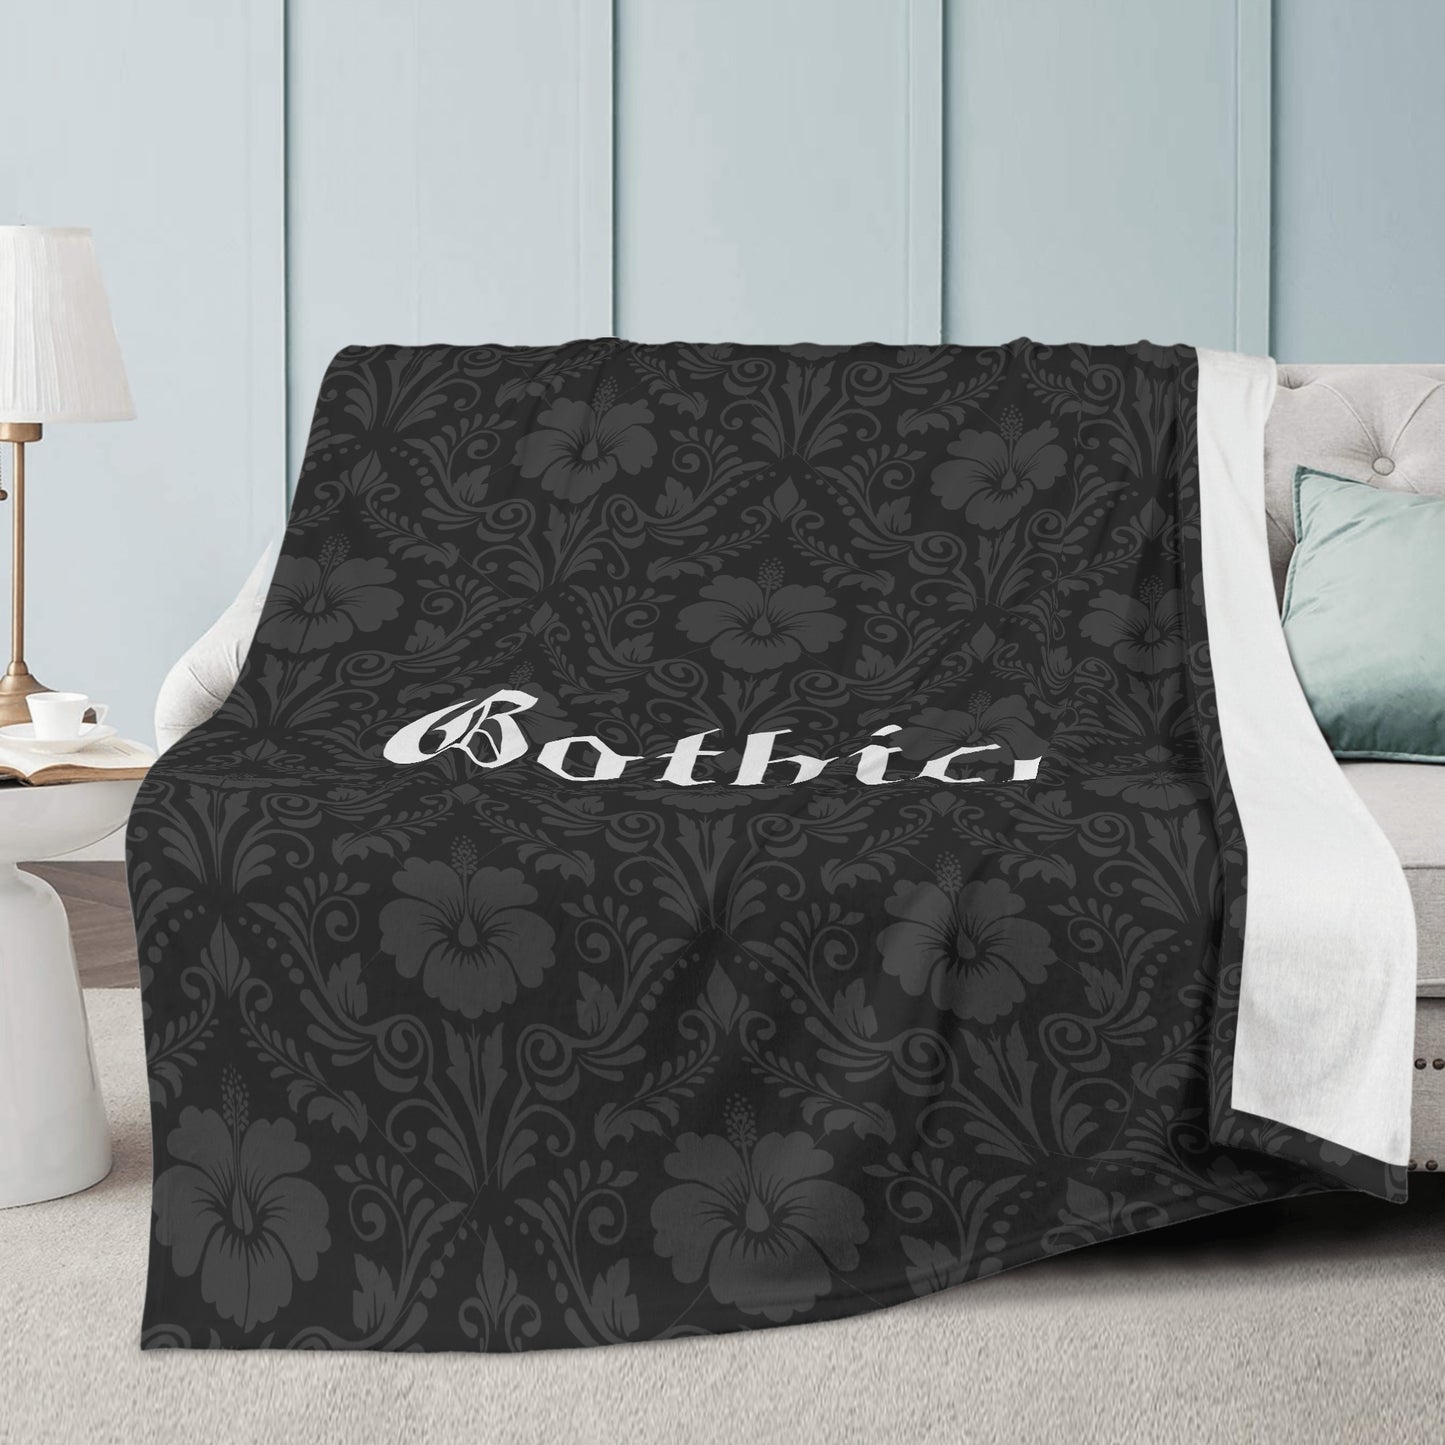 Gothicc Flowers Premium Fleece Blanket